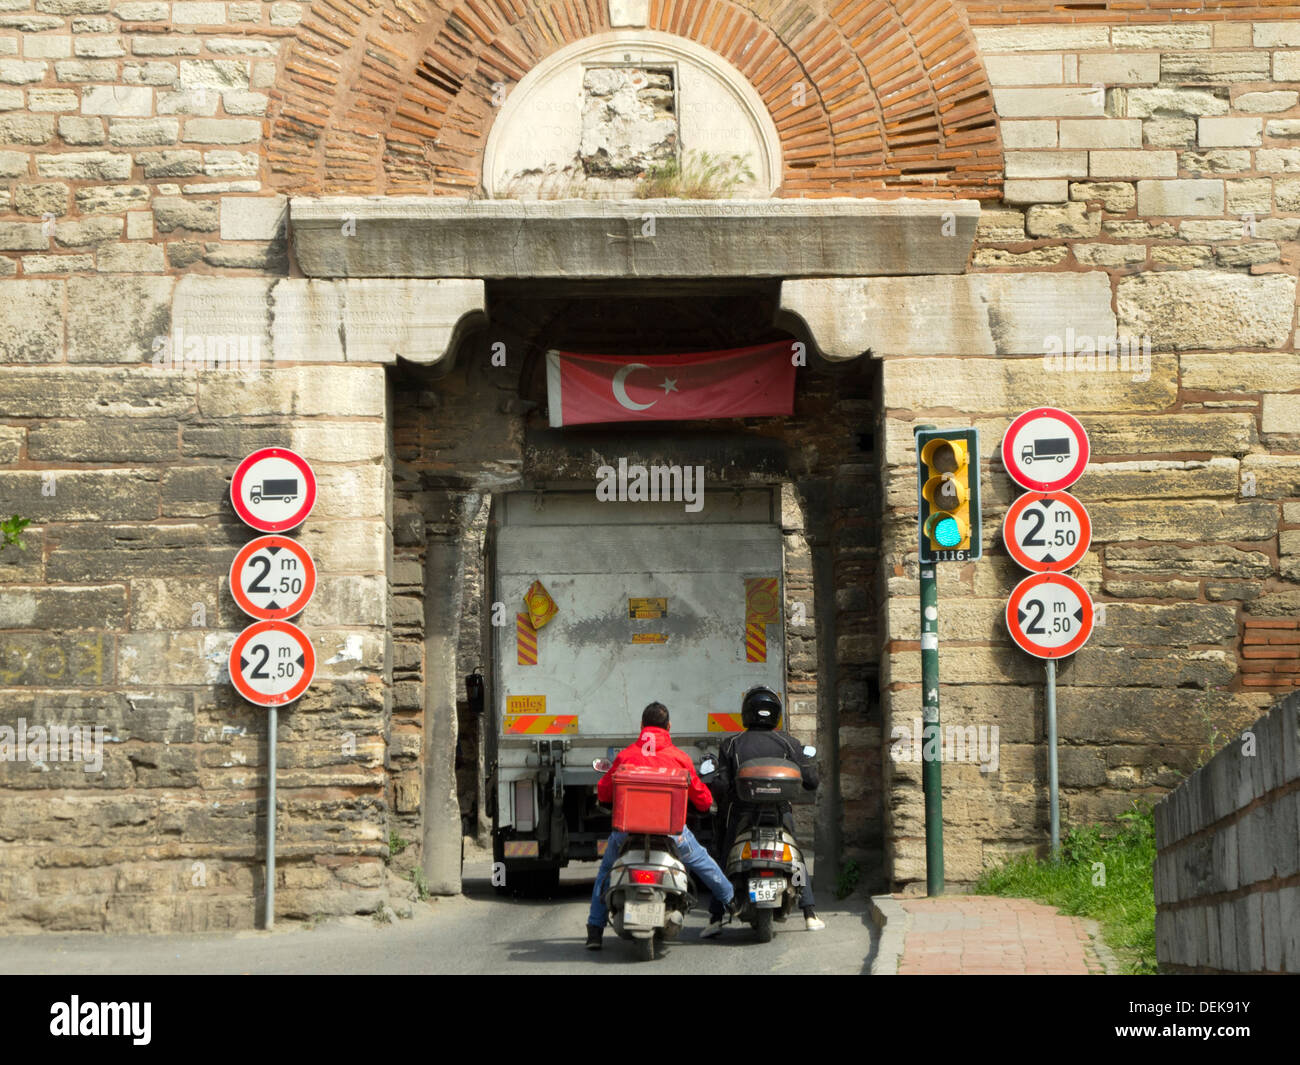 Istanbul, Mevlanakapi, Mevlana Stadttor dans der Mauer, Theodosianischen LKW passen kaum hindurch Banque D'Images